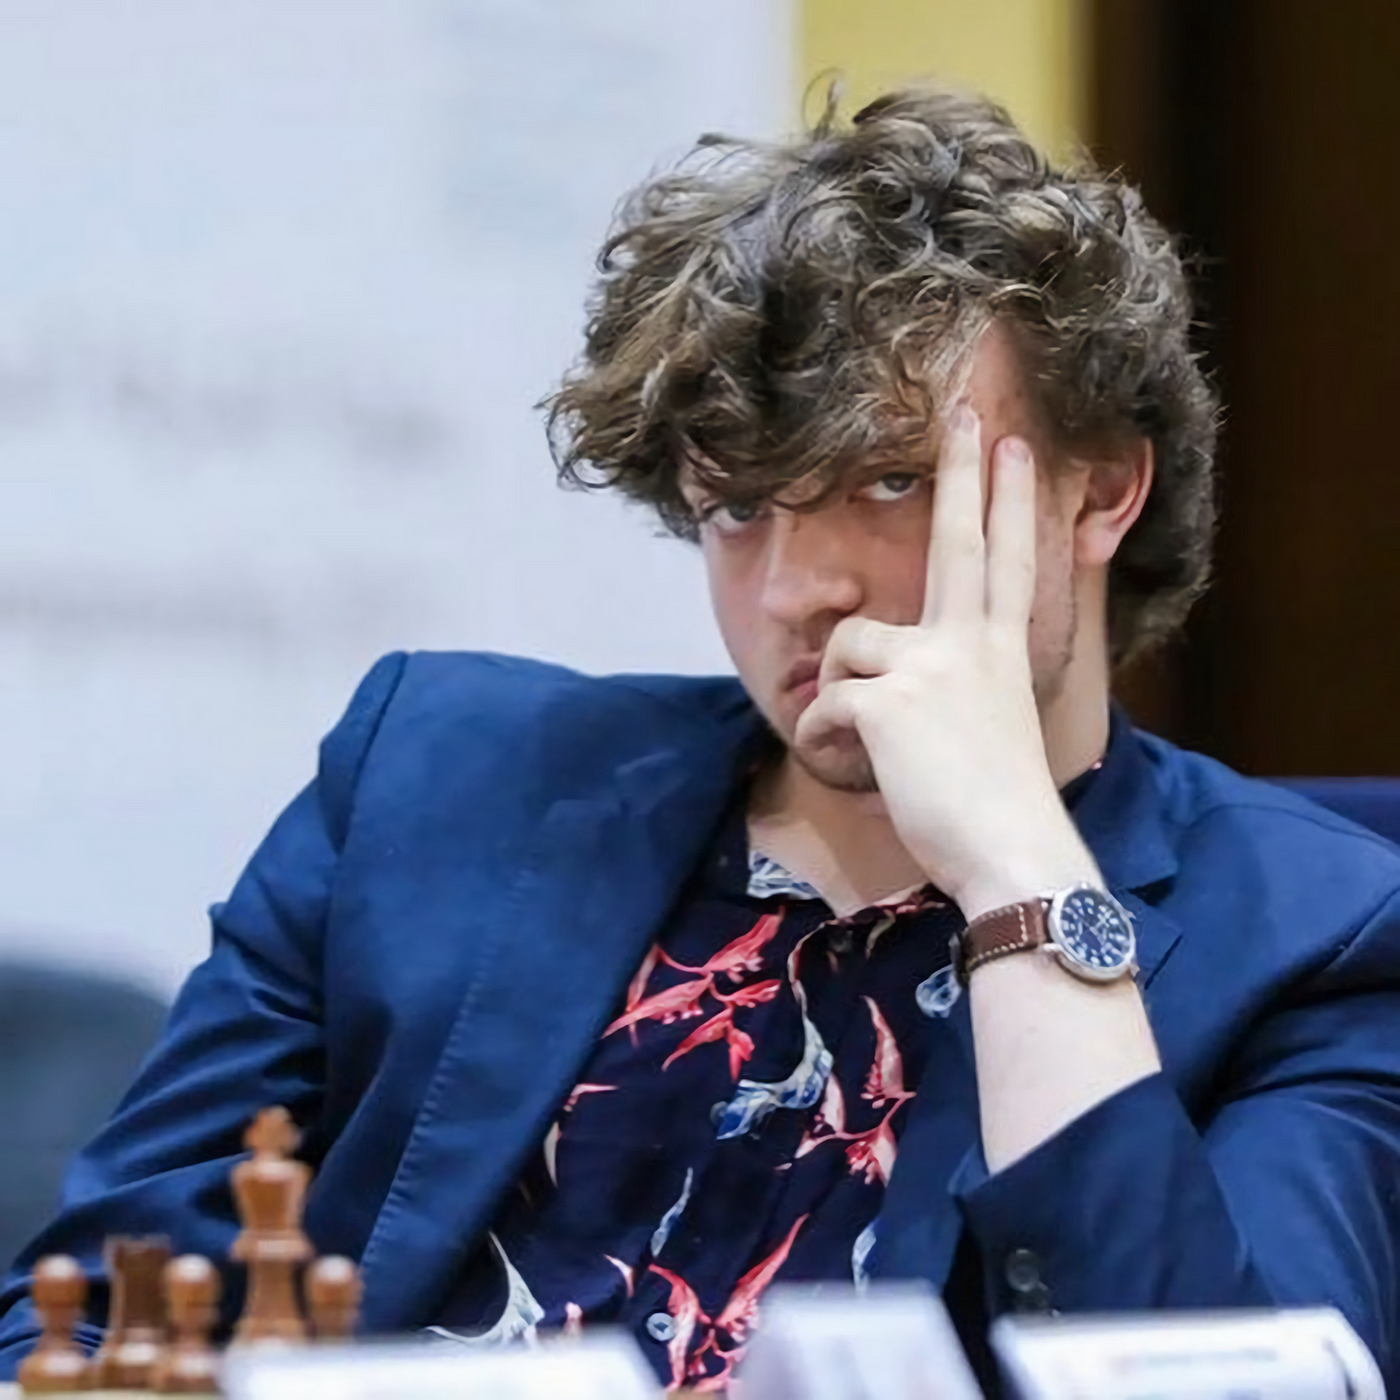 Magnus Carlsen vs Alireza Firouzja. Champions Chess Tour Julius Baer G